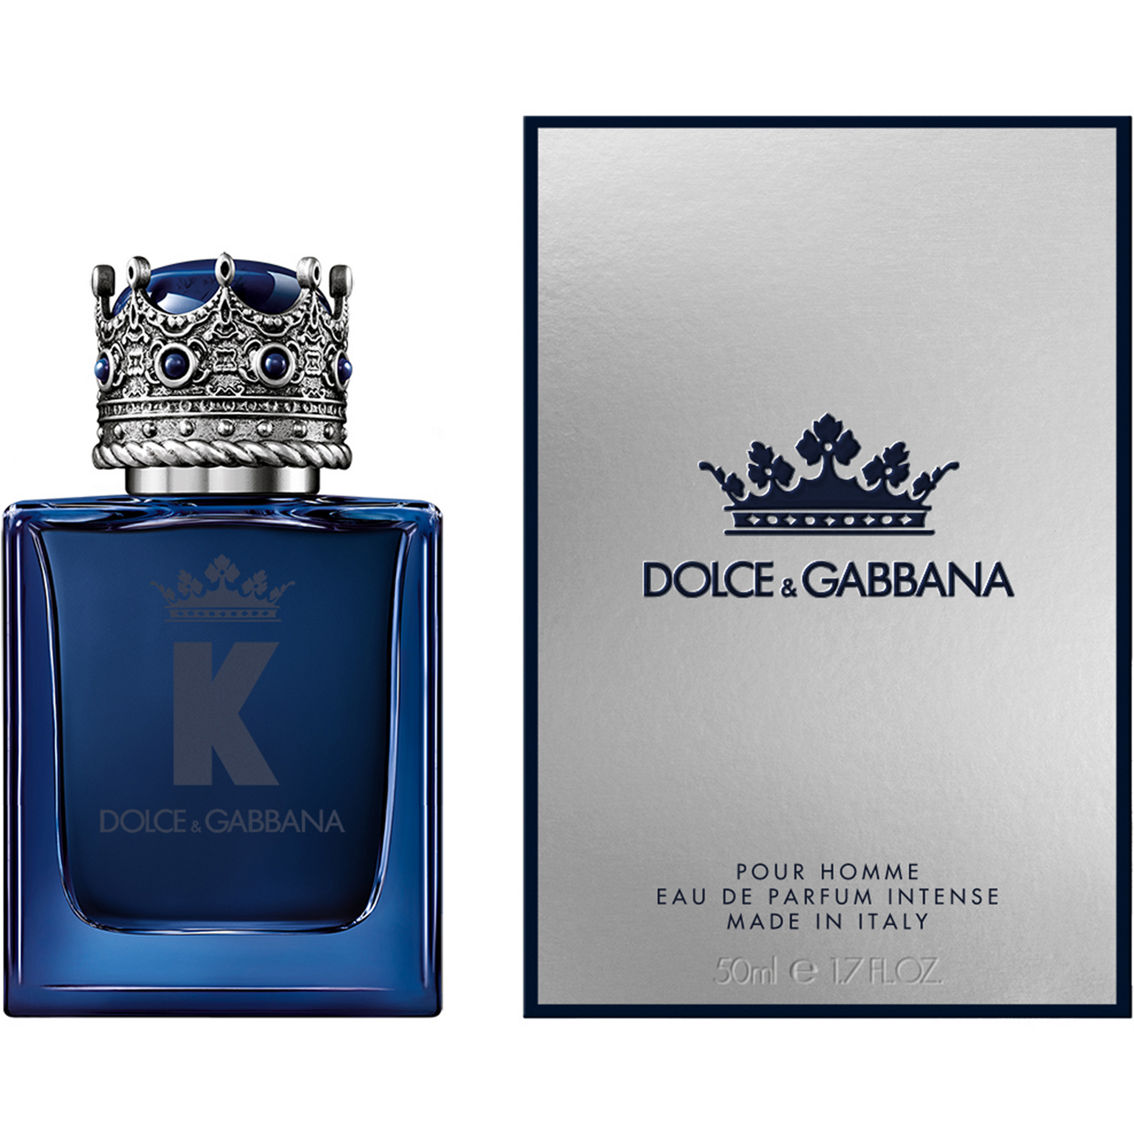 Dolce & Gabbana K Eau de Parfum Intense Spray - Image 2 of 2